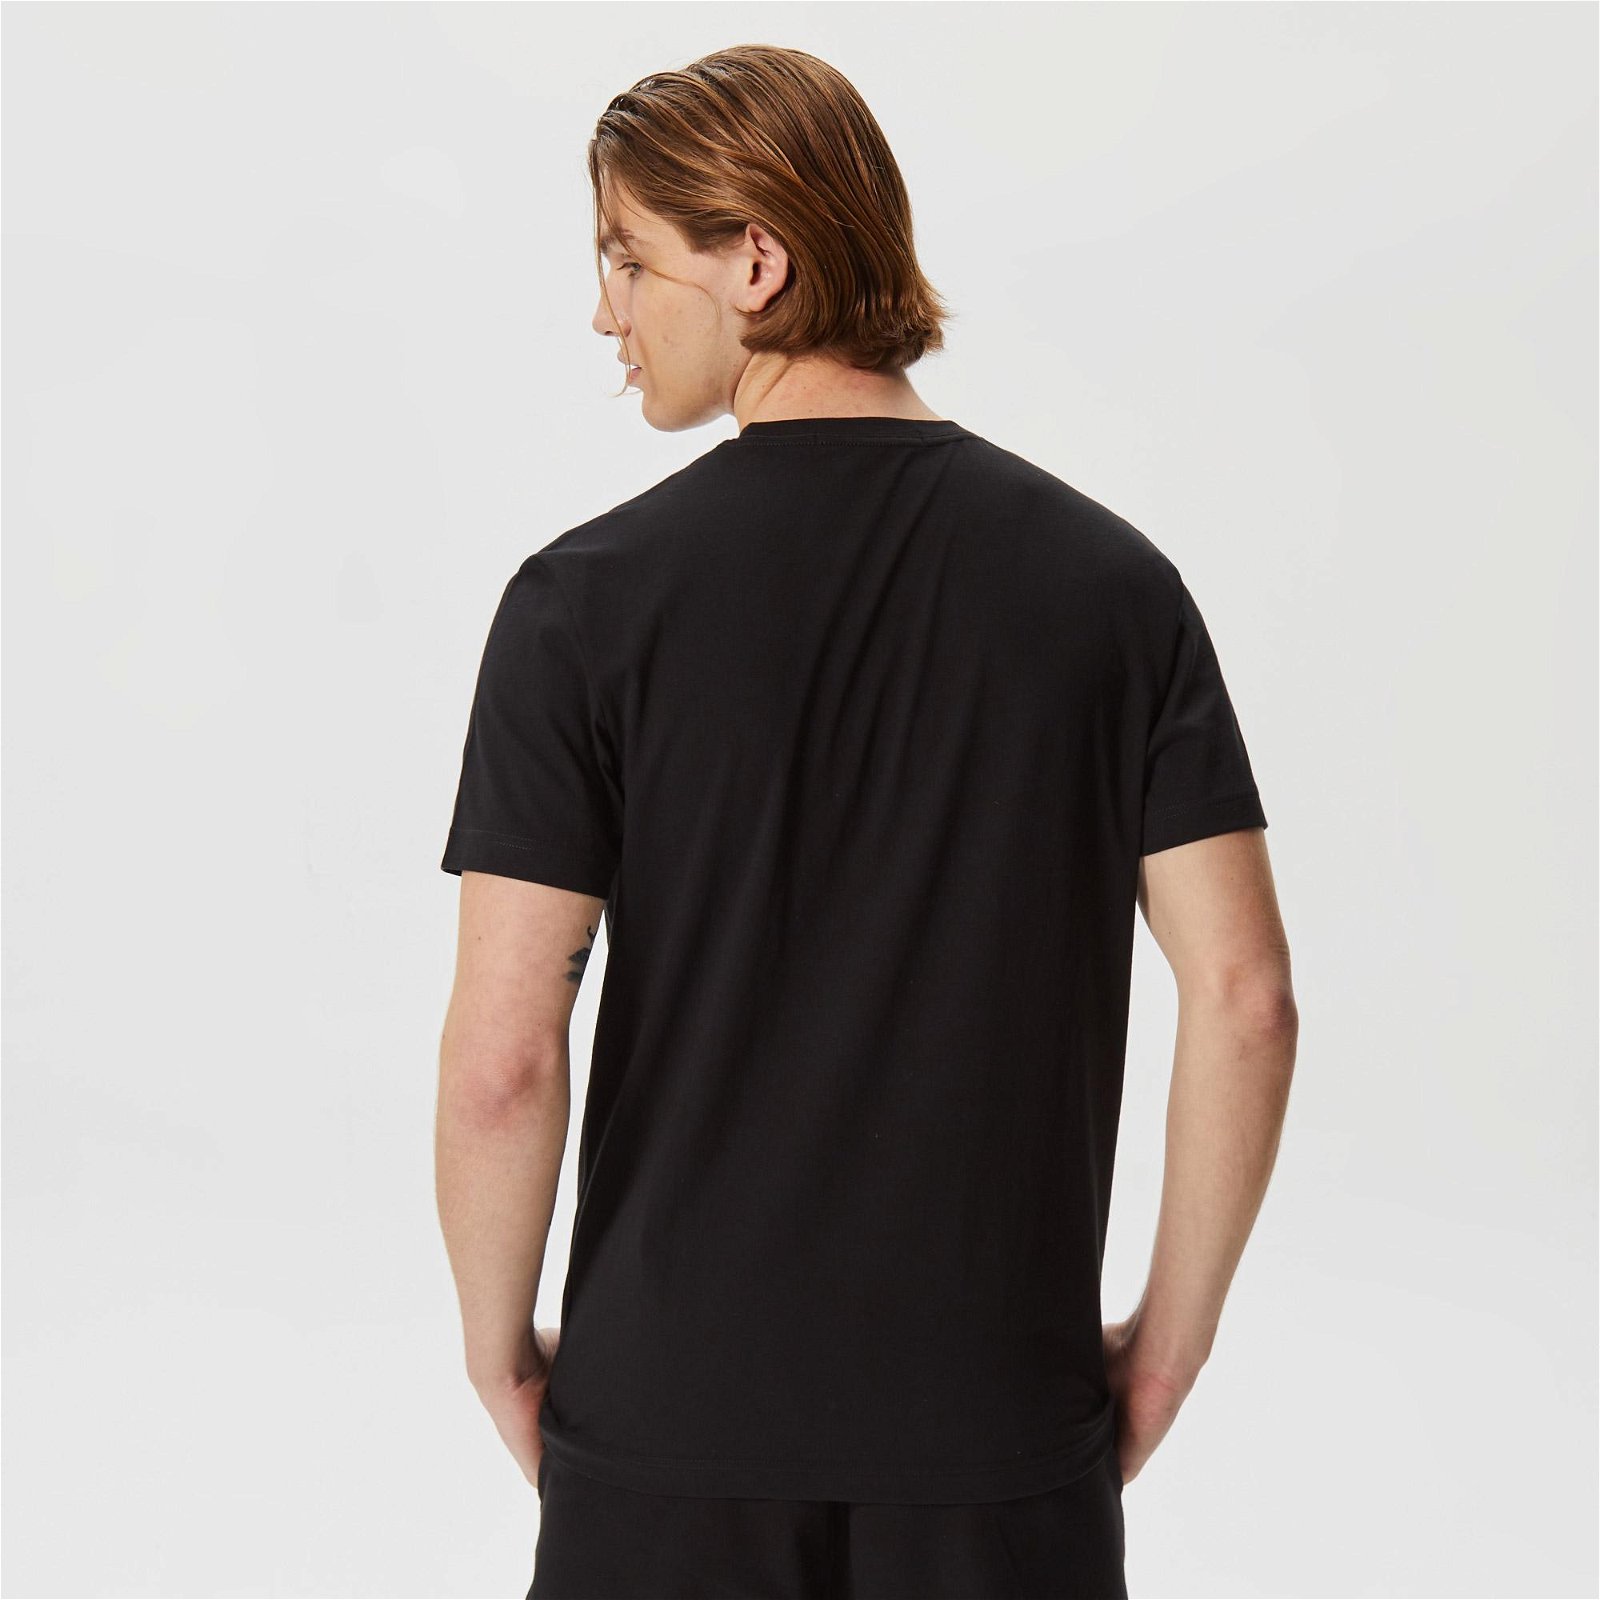 Calvin Klein Jeans Blurred Address Logo Erkek Siyah T-Shirt